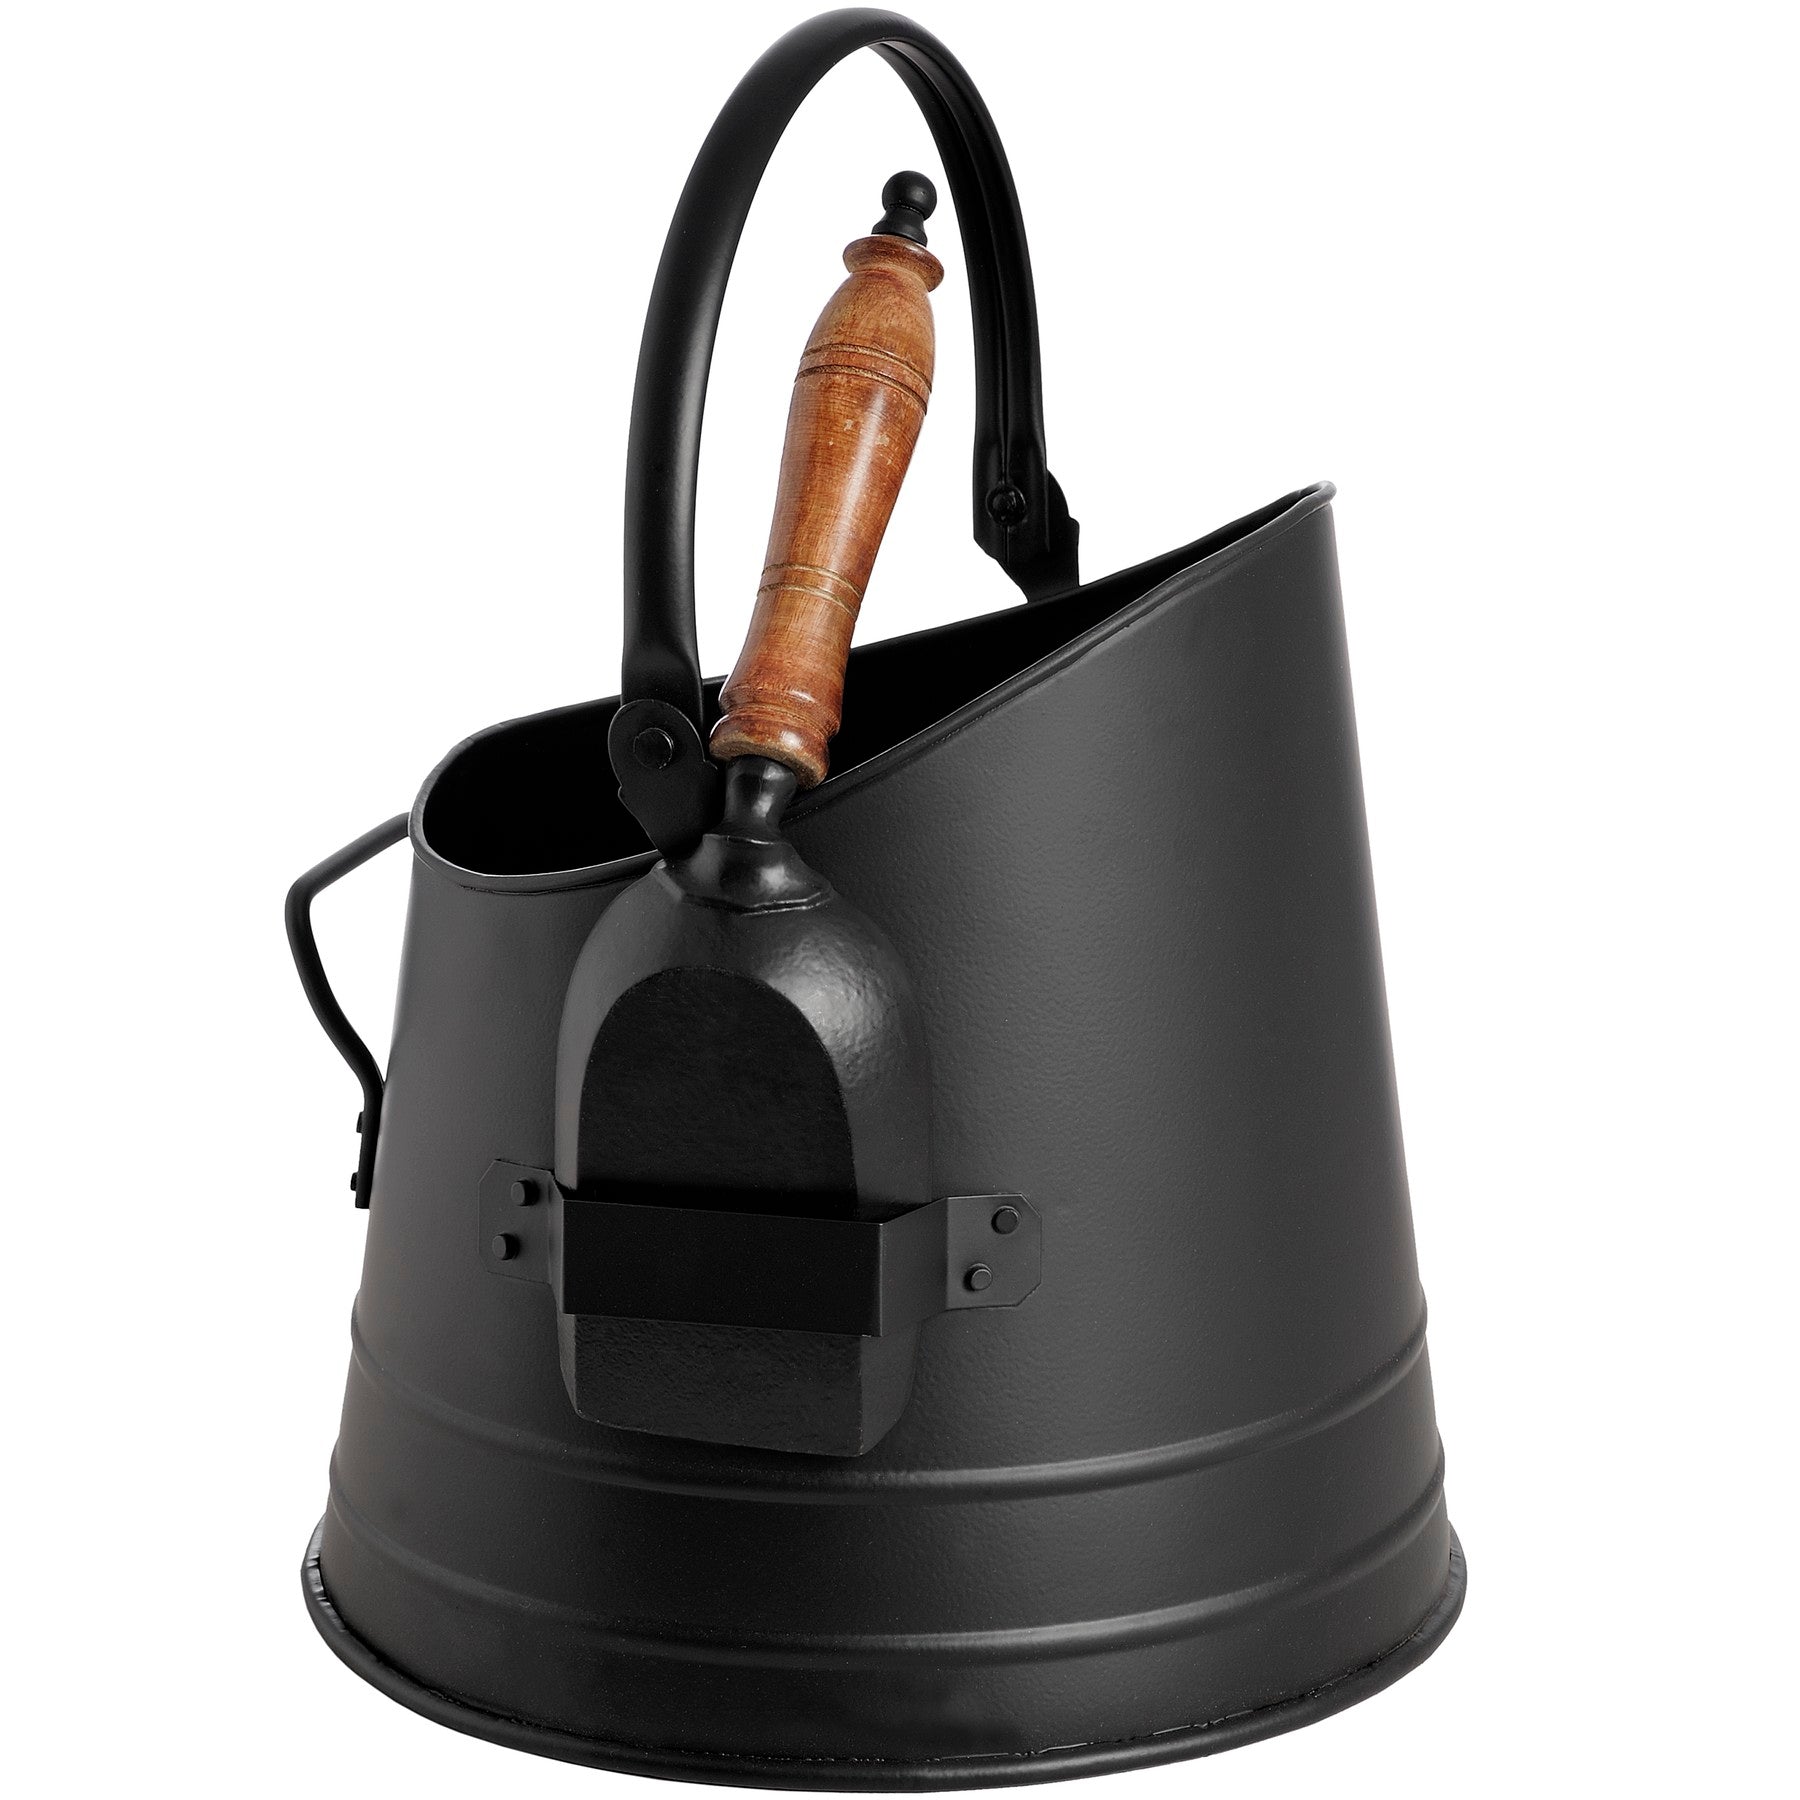 View Black Coal Bucket with Teak Handle Shovel information